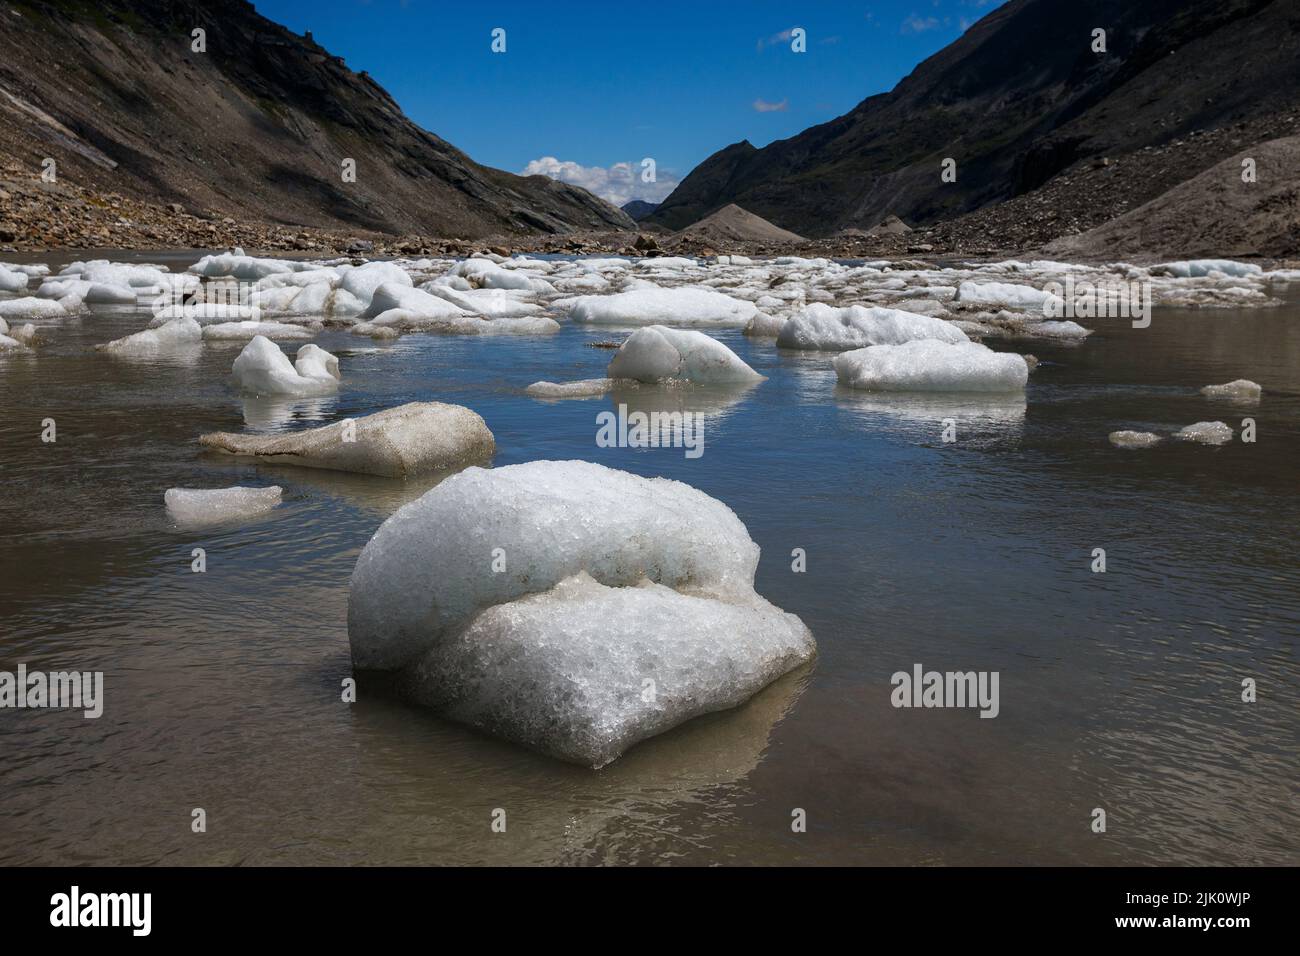 Glaciar Pasterze, bloques de hielo de lengua terminal del glaciar sobre el lago proglacial. Grupo Glockner. Alpes austríacos. Europa. Foto de stock